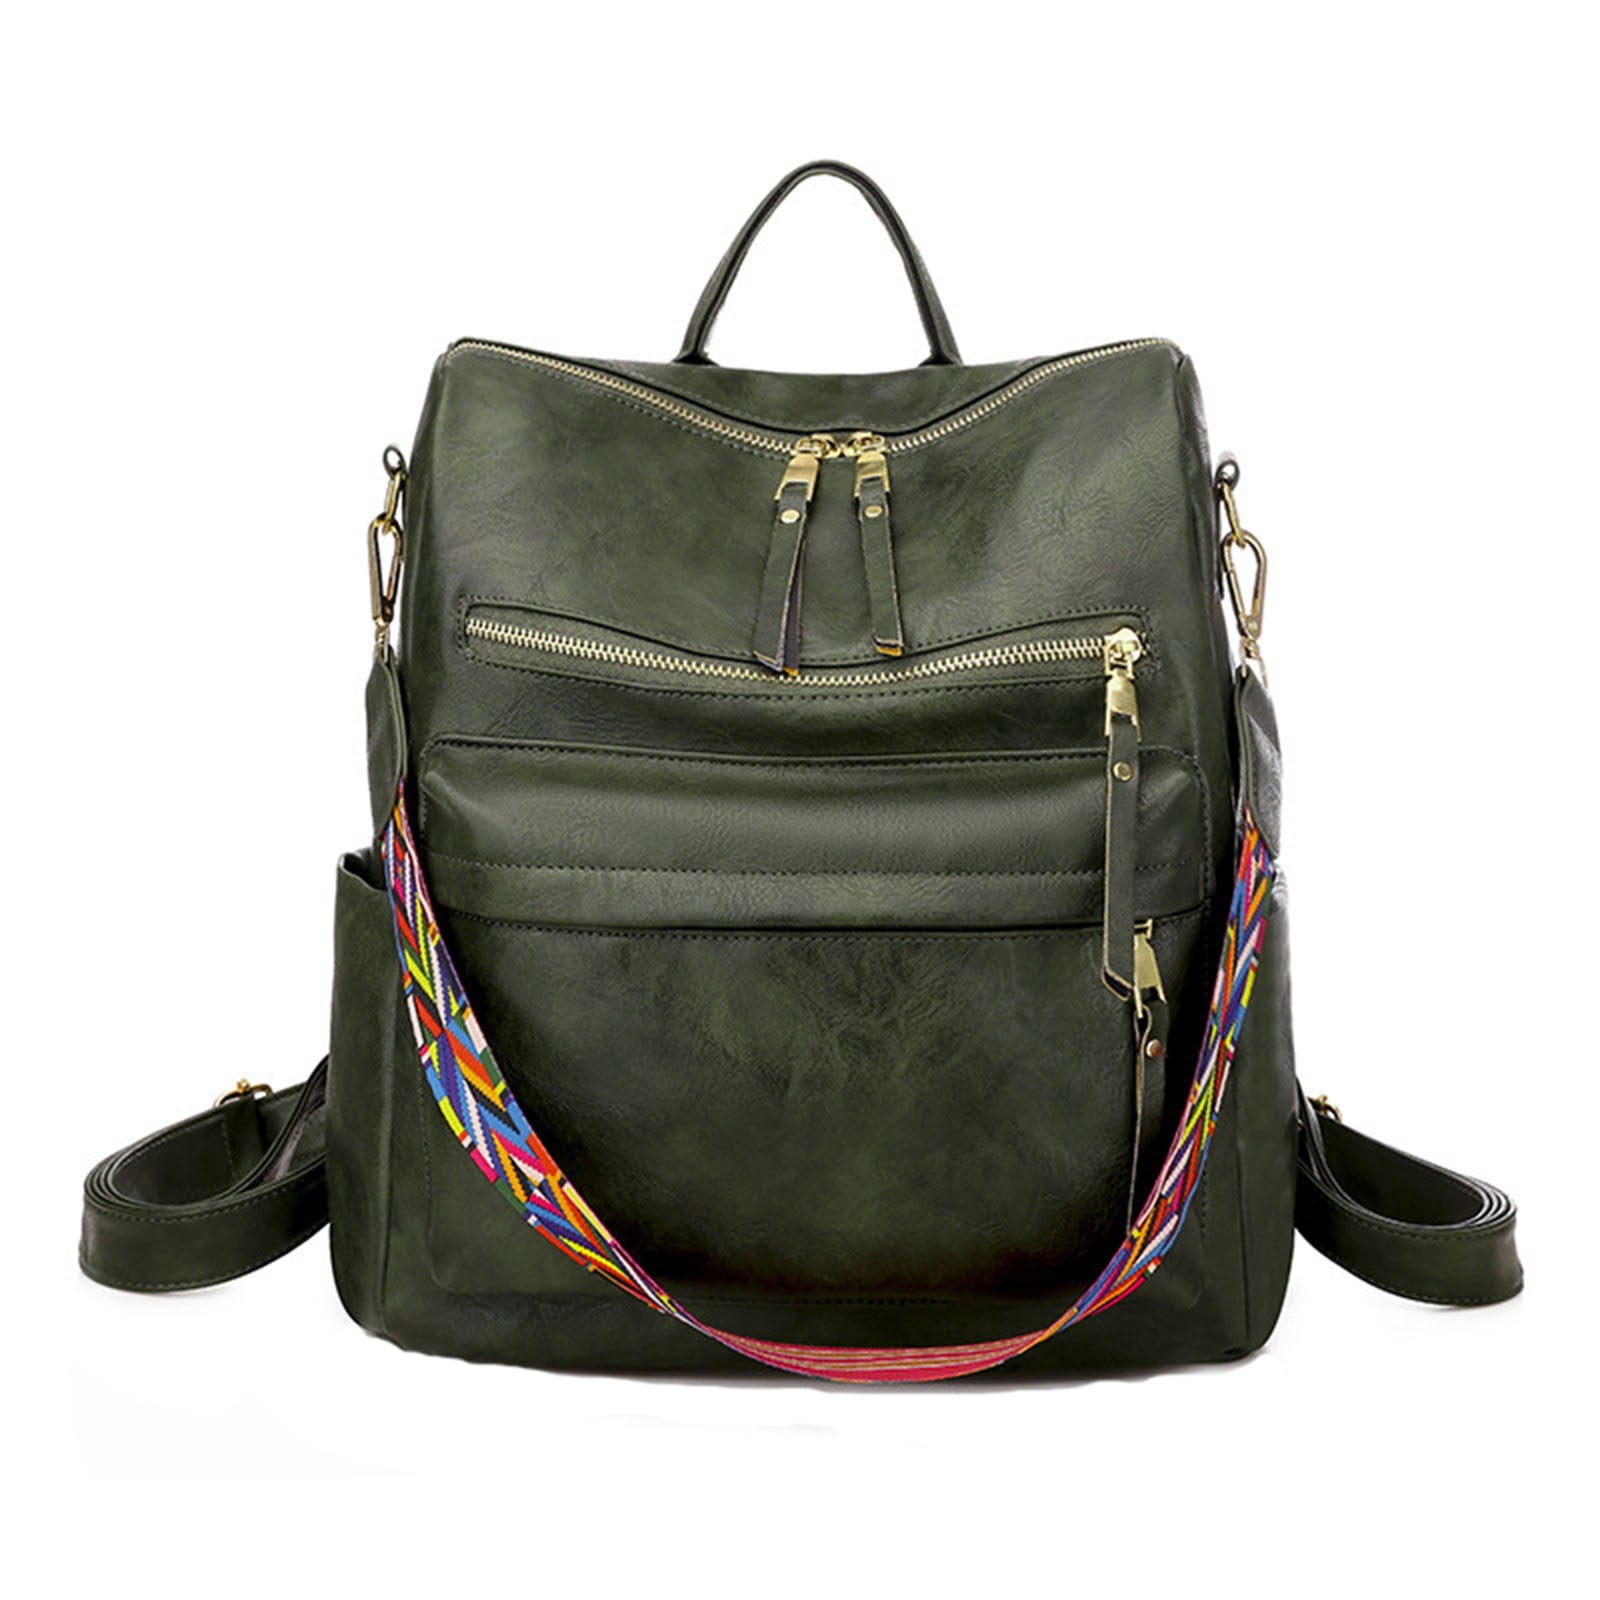 ALTOSY Genuine Leather Backpack Purse for Women Large Casual Shoulder Bags  S106 Indigo Blue - Walmart.com